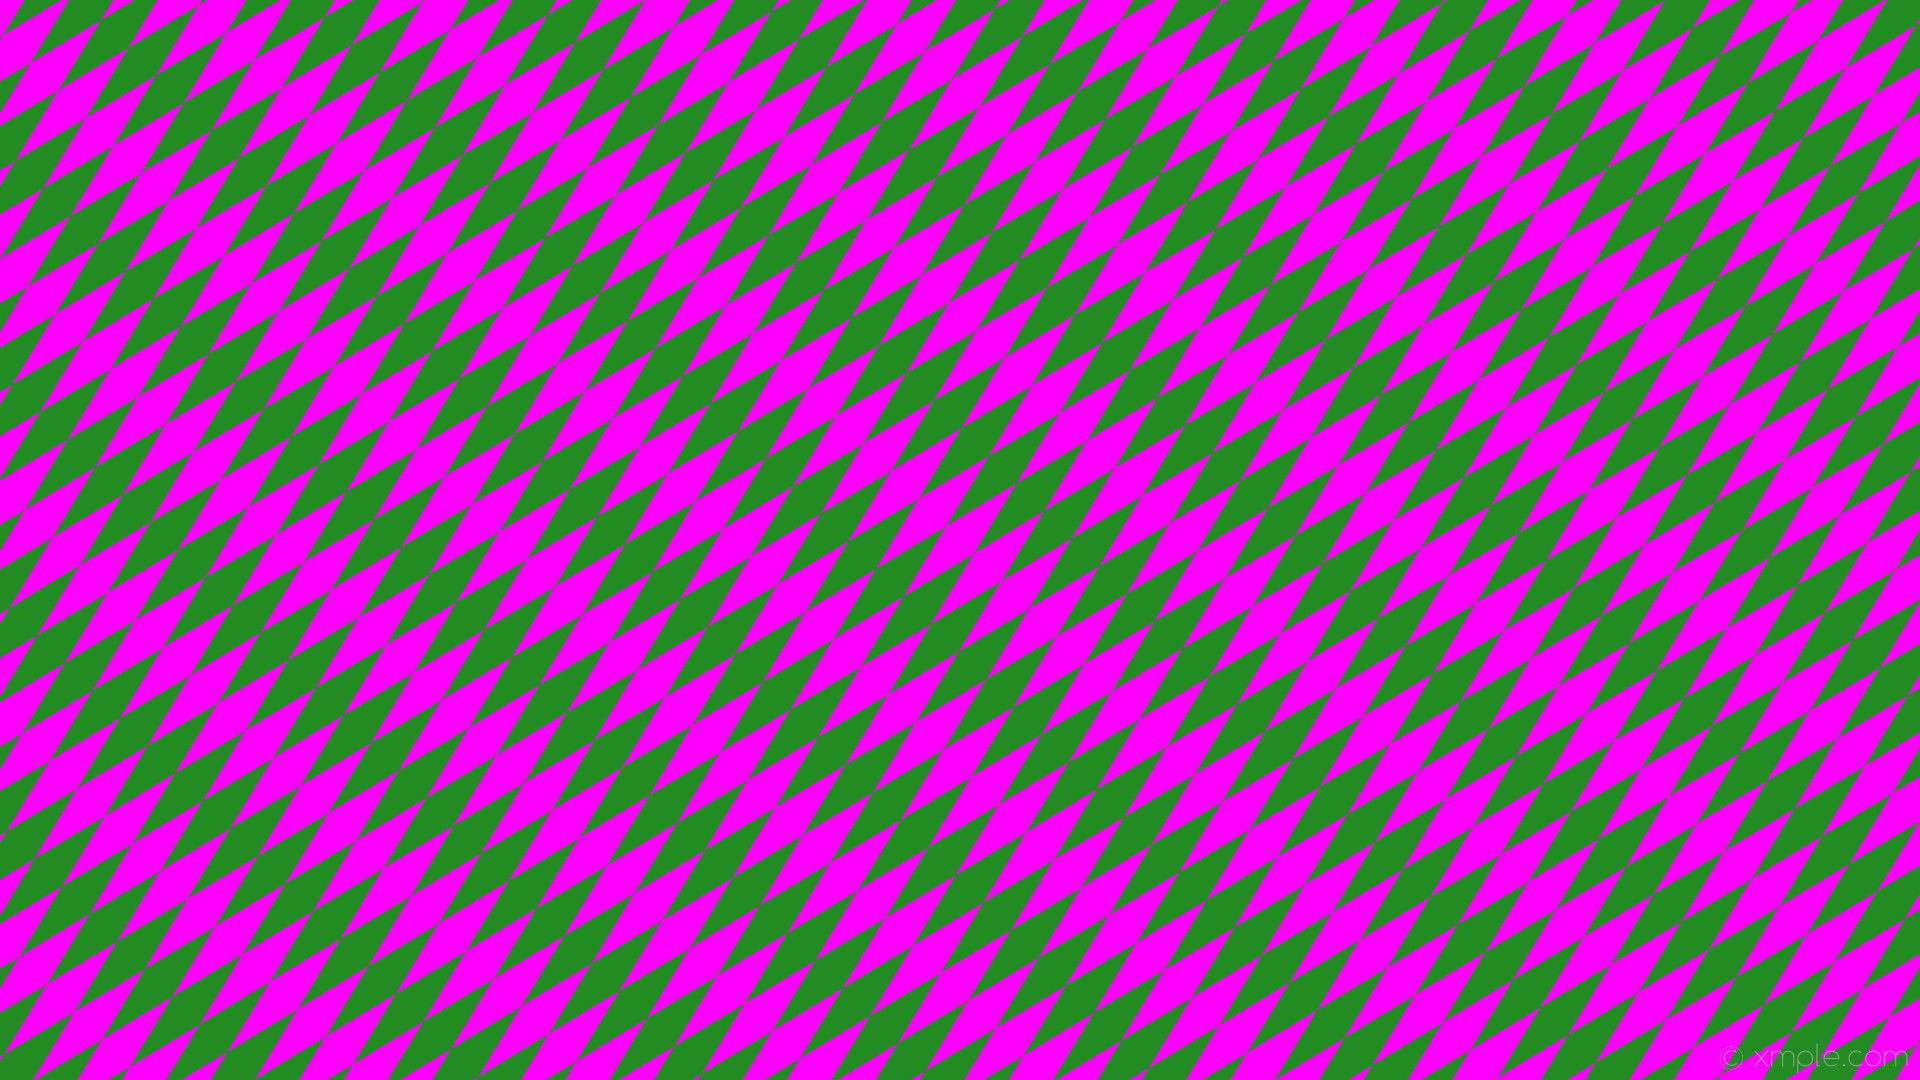 1920x1080 wallpaper rhombus purple diamond lozenge green magenta forest green #ff00ff  #228b22 45Â° 160px